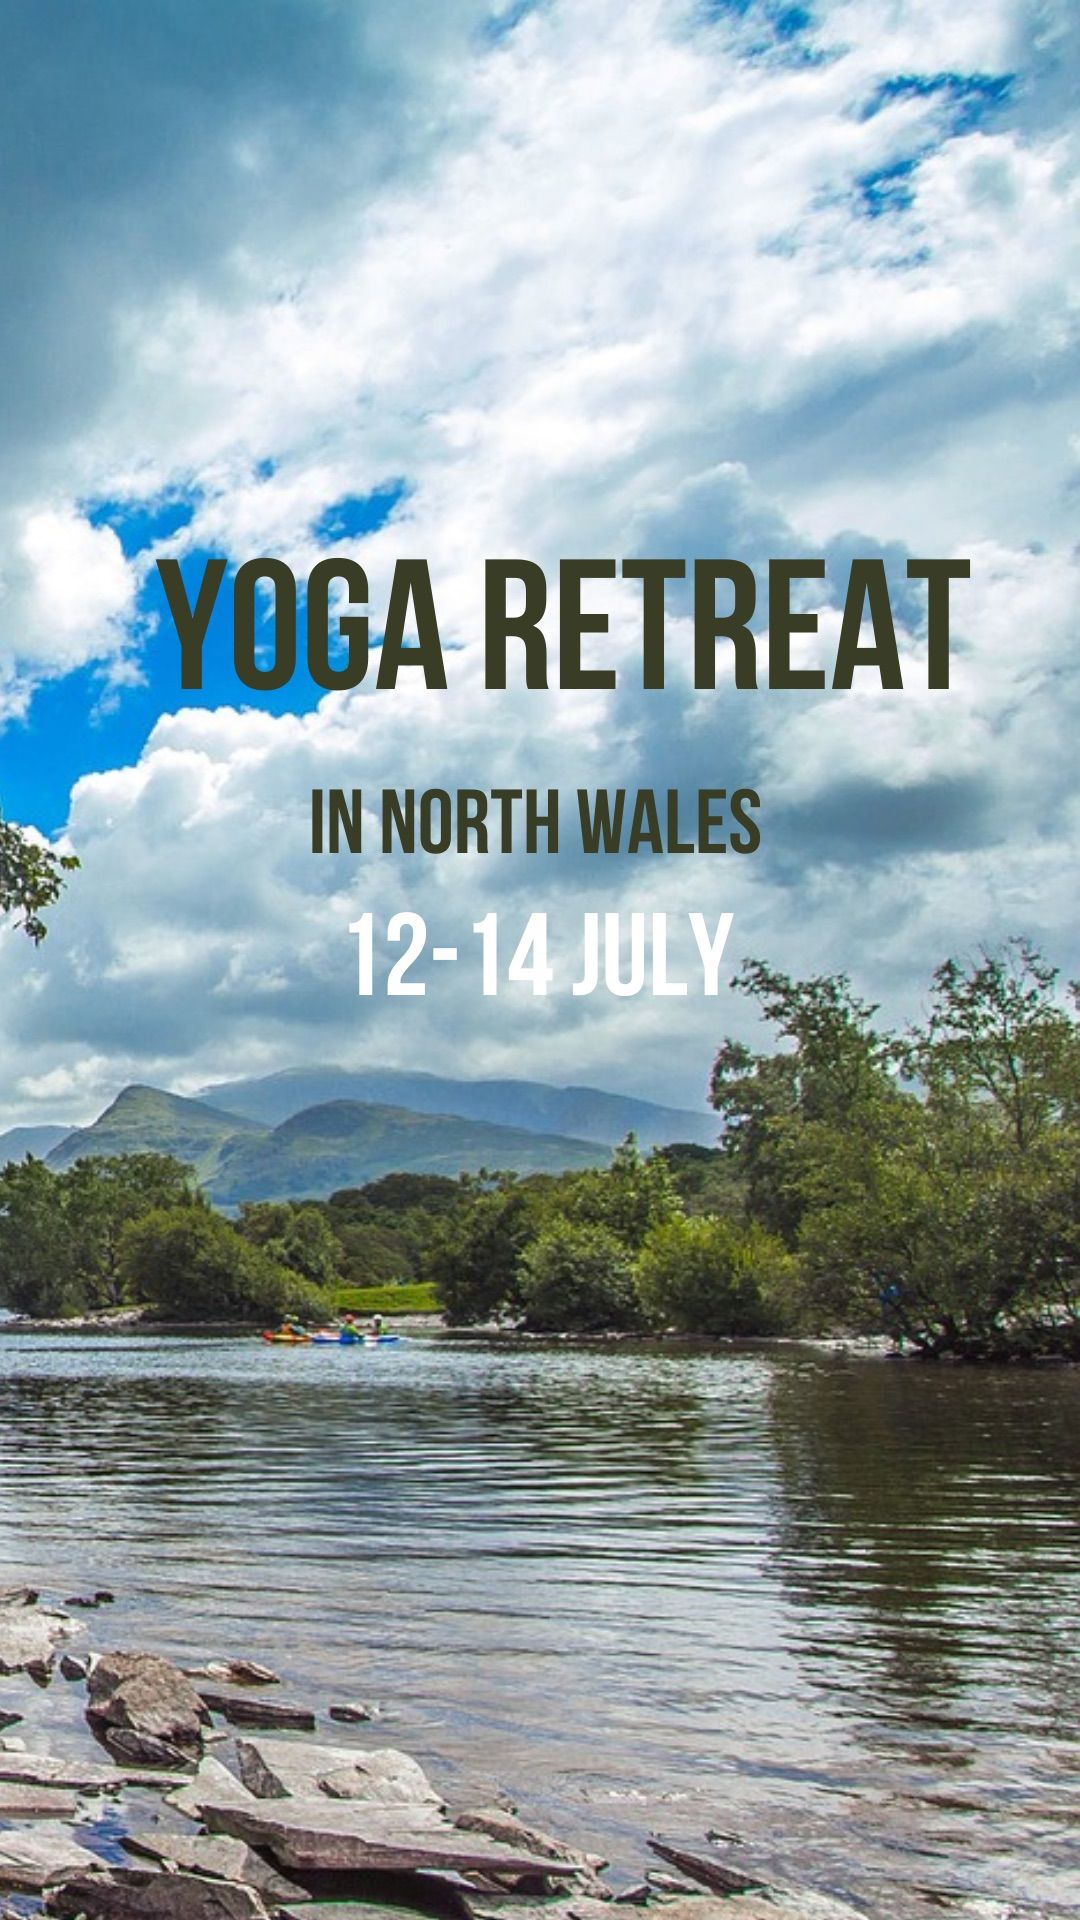 Yoga retreat in North Wales